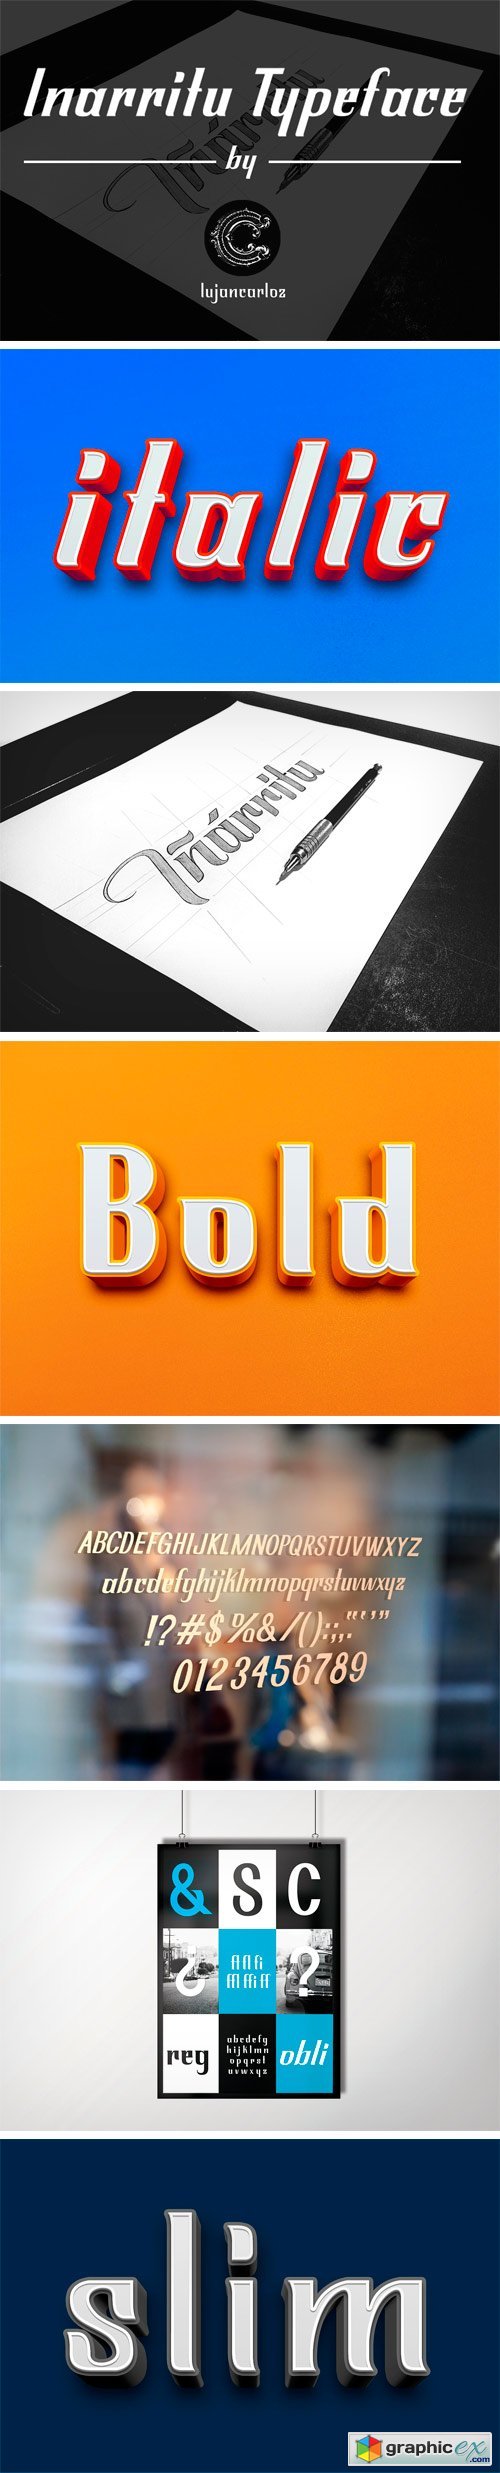 Inarritu Typeface